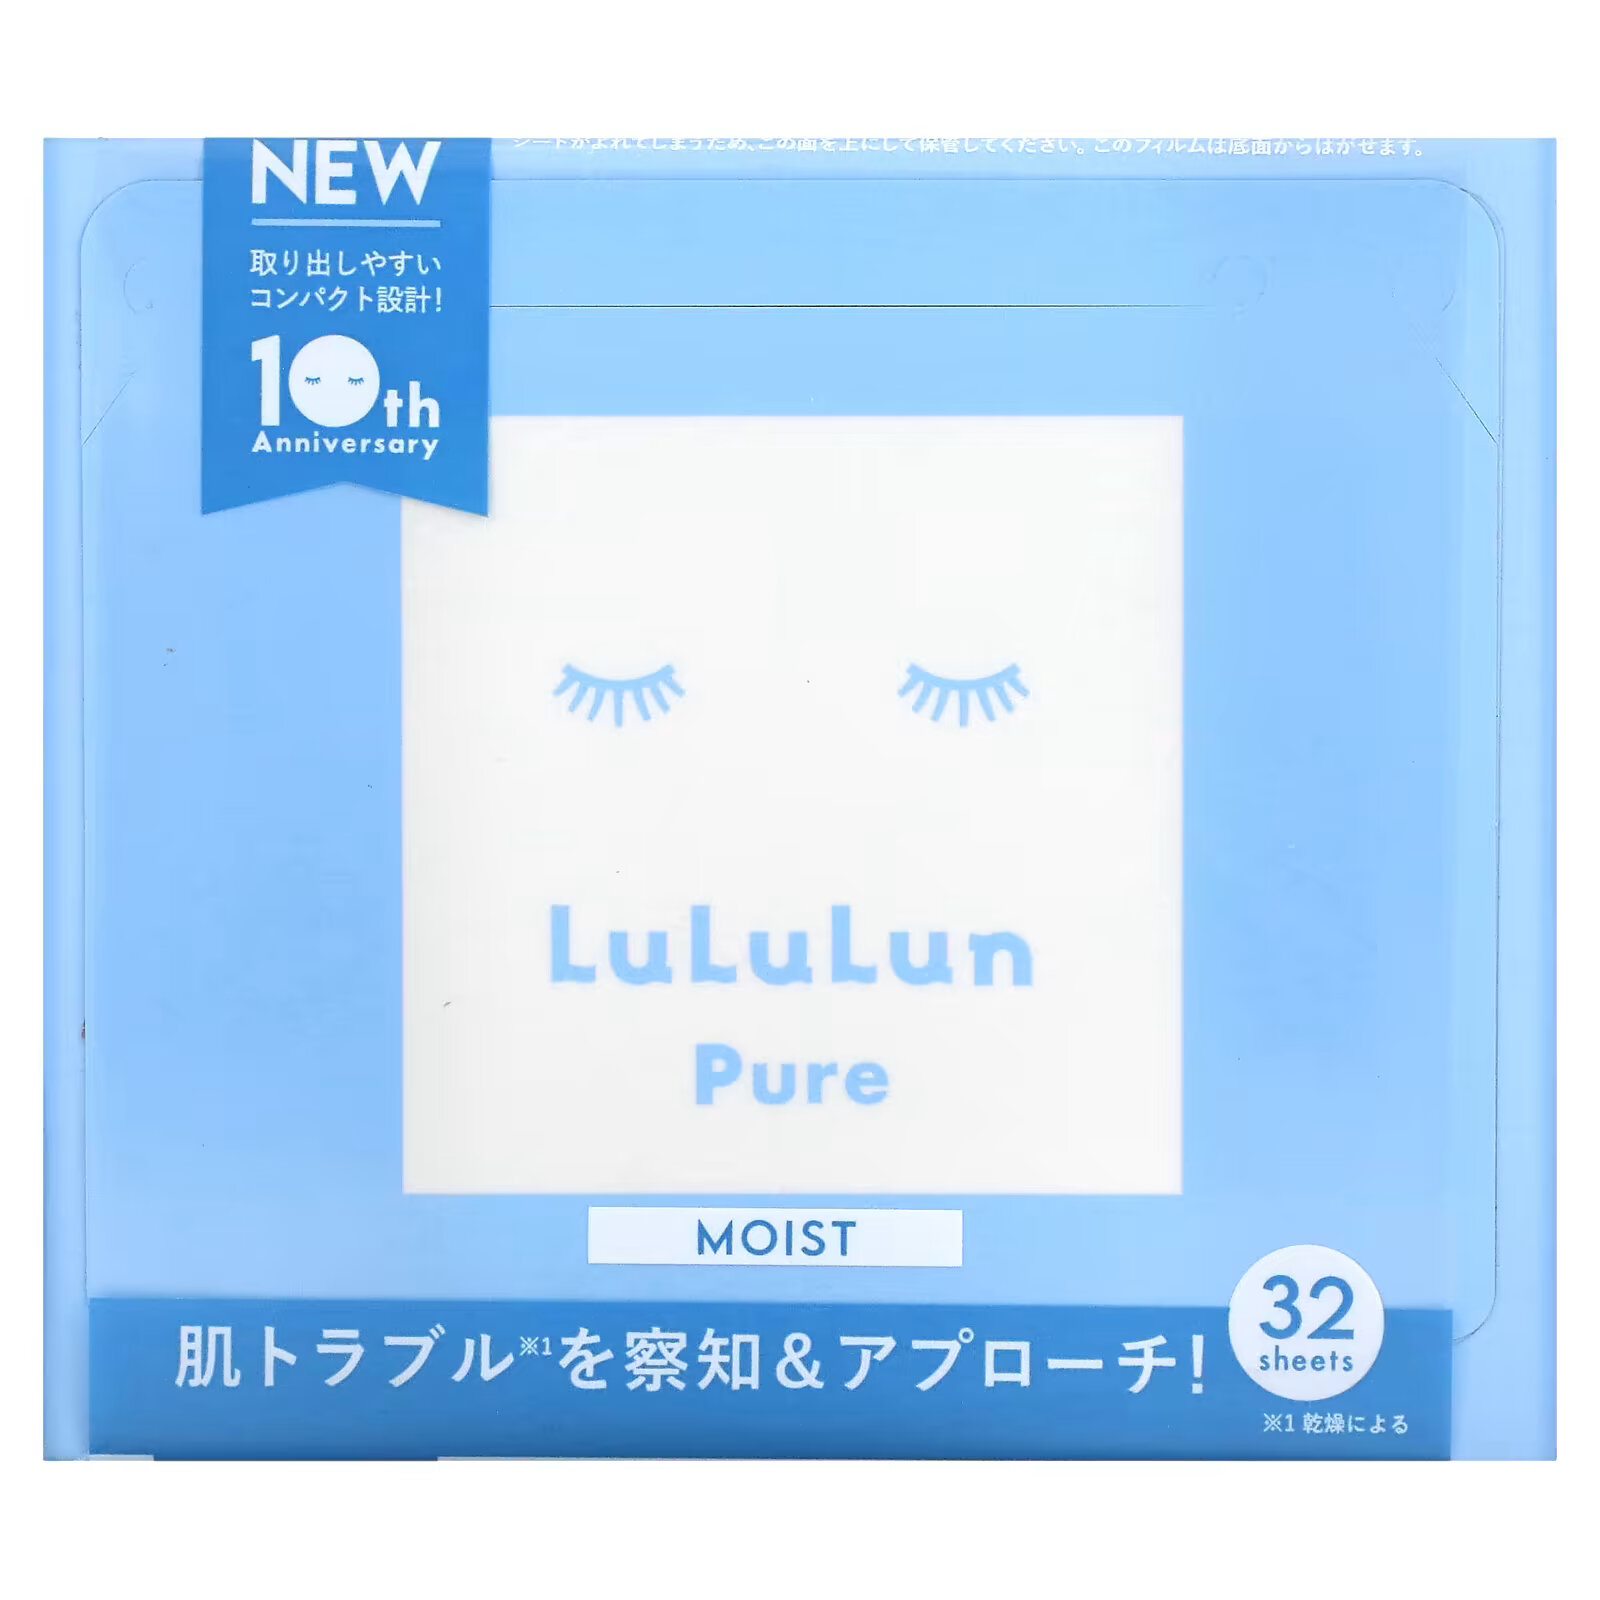 цена Lululun, Beauty Sheet Mask, увлажняющая, чистый синий 6FB`` 32 шт.